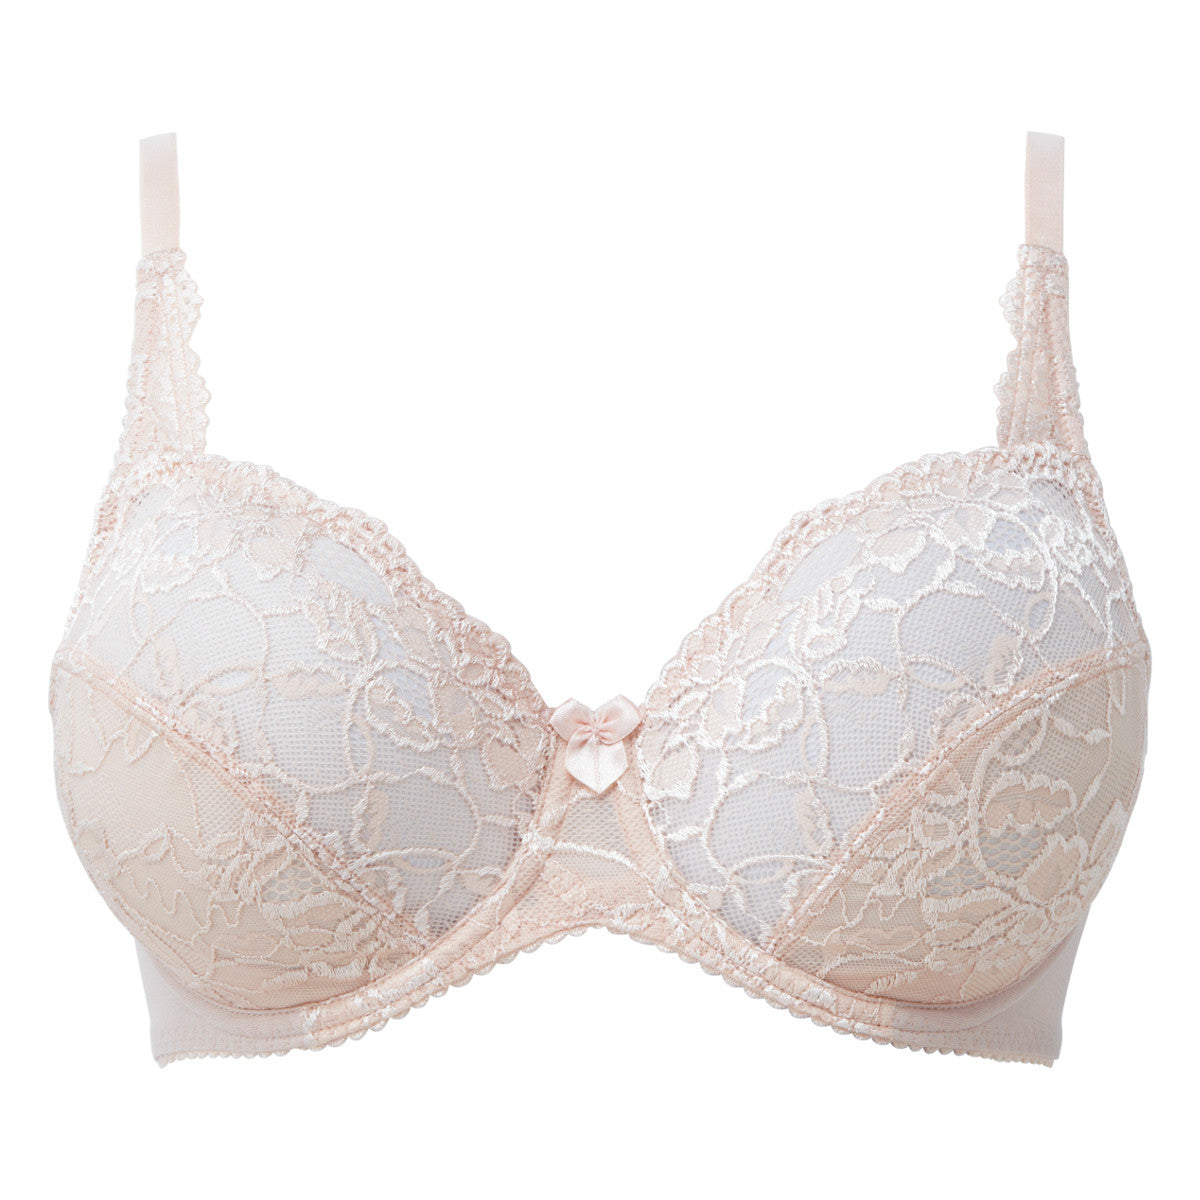 34DD Bra Bundle x3 bras including CHARNOS & M&S ladies lingerie (1118)